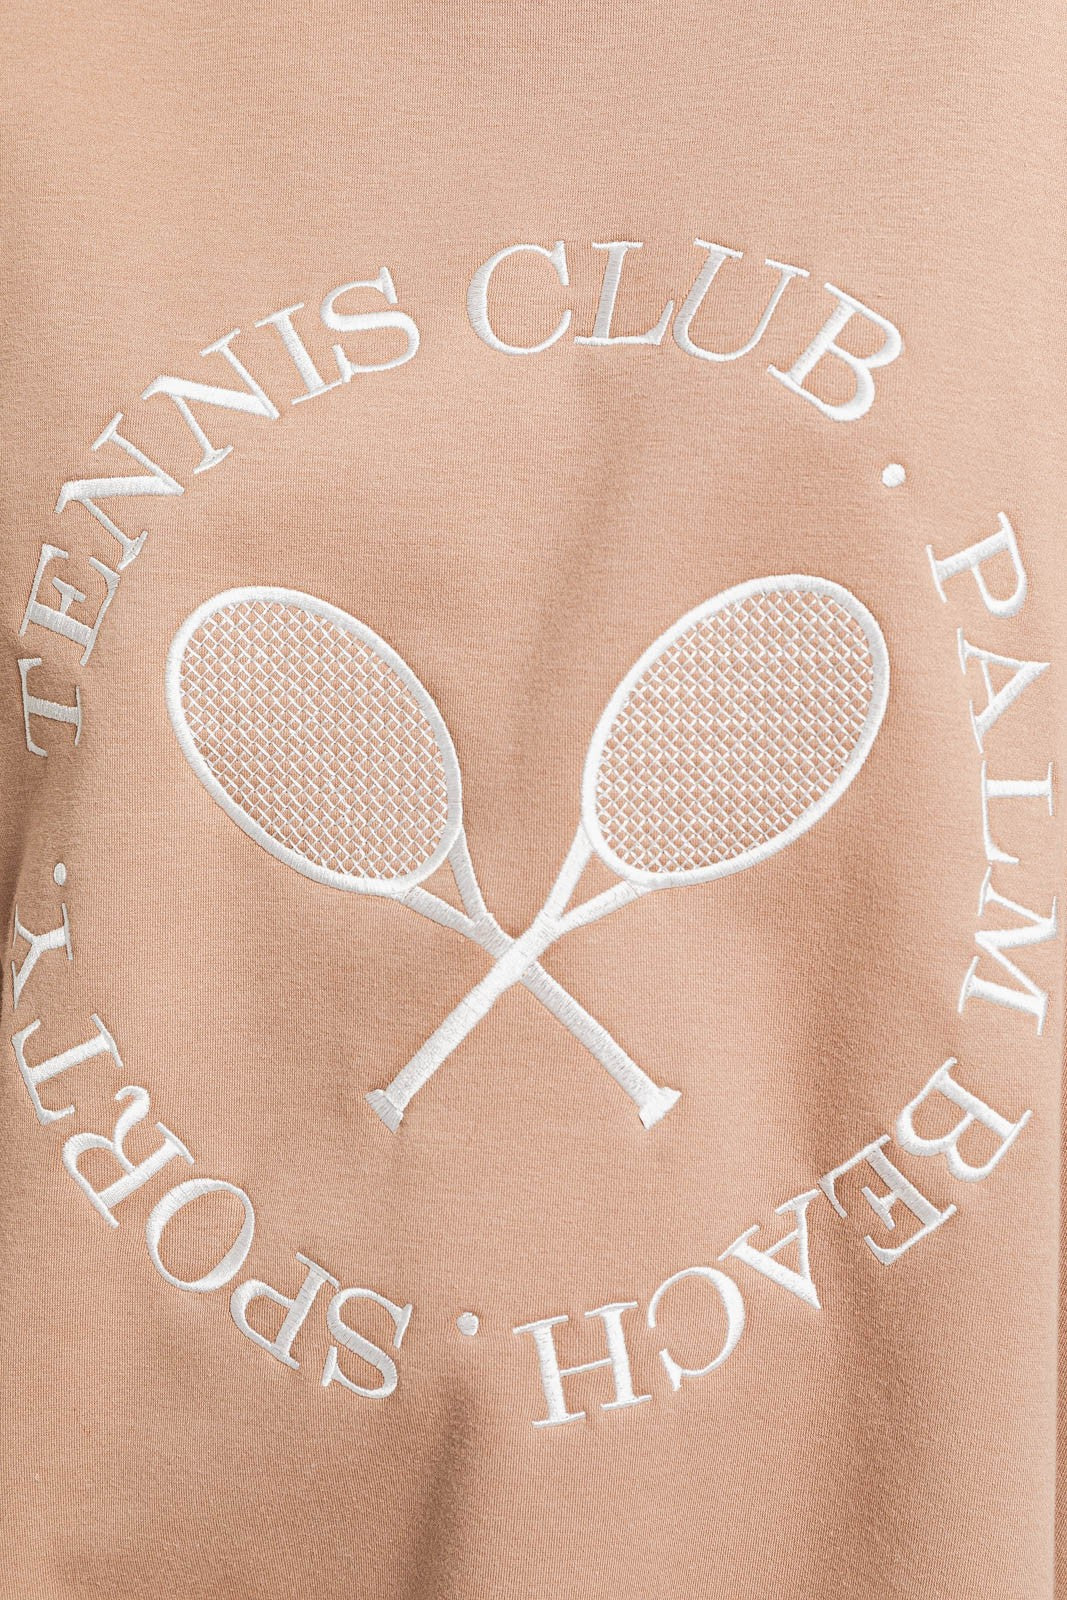 Palm Beach Tennis Club Sweatshirt